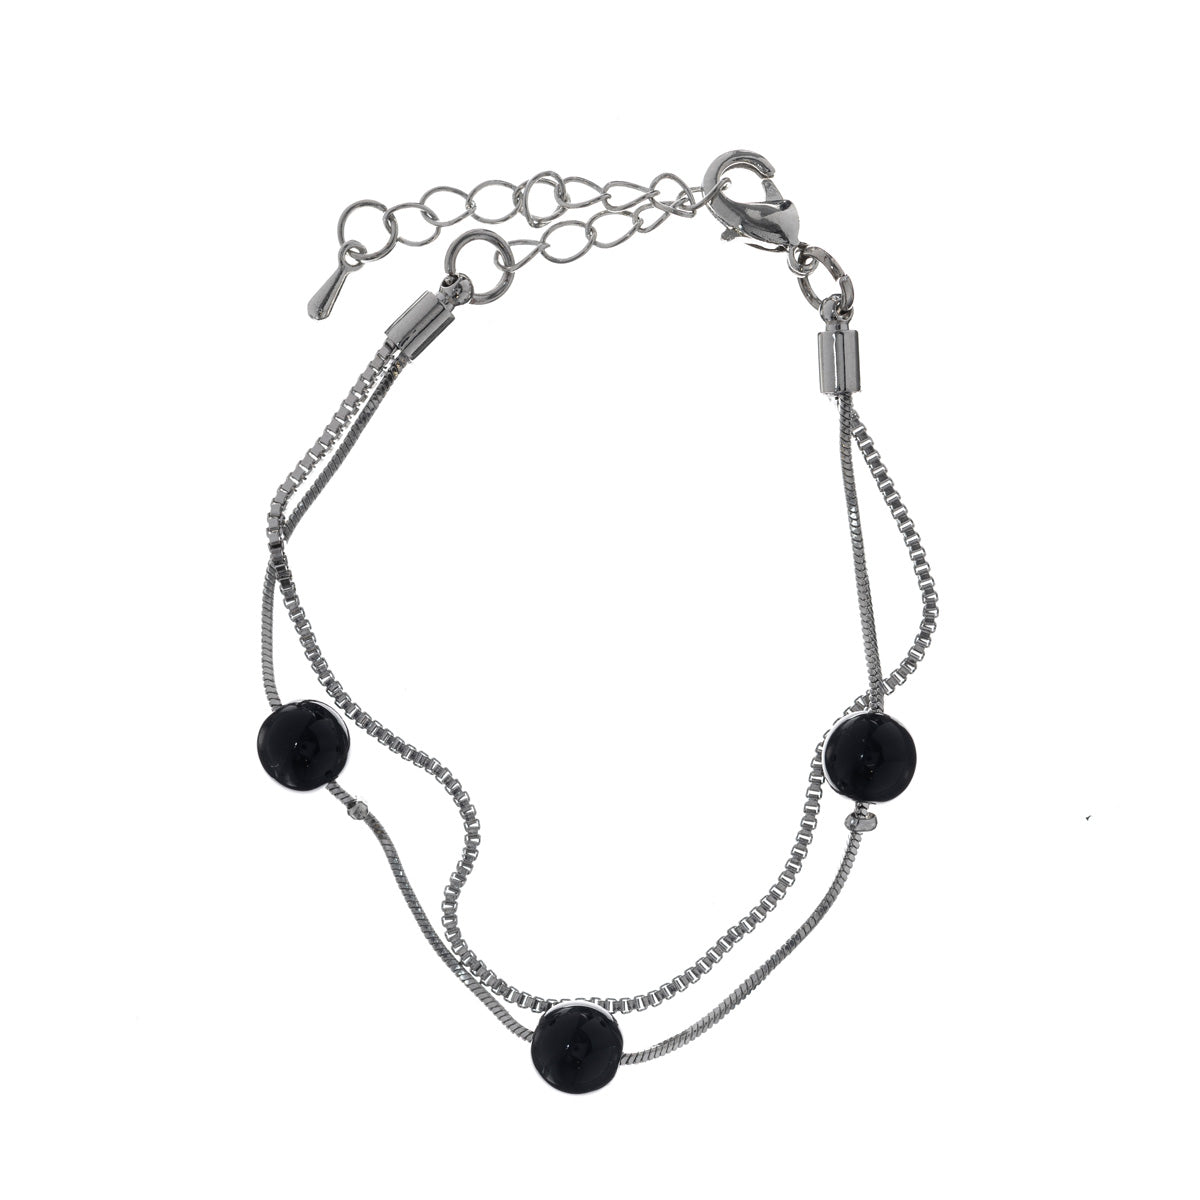 Siro chain bracelet with beads